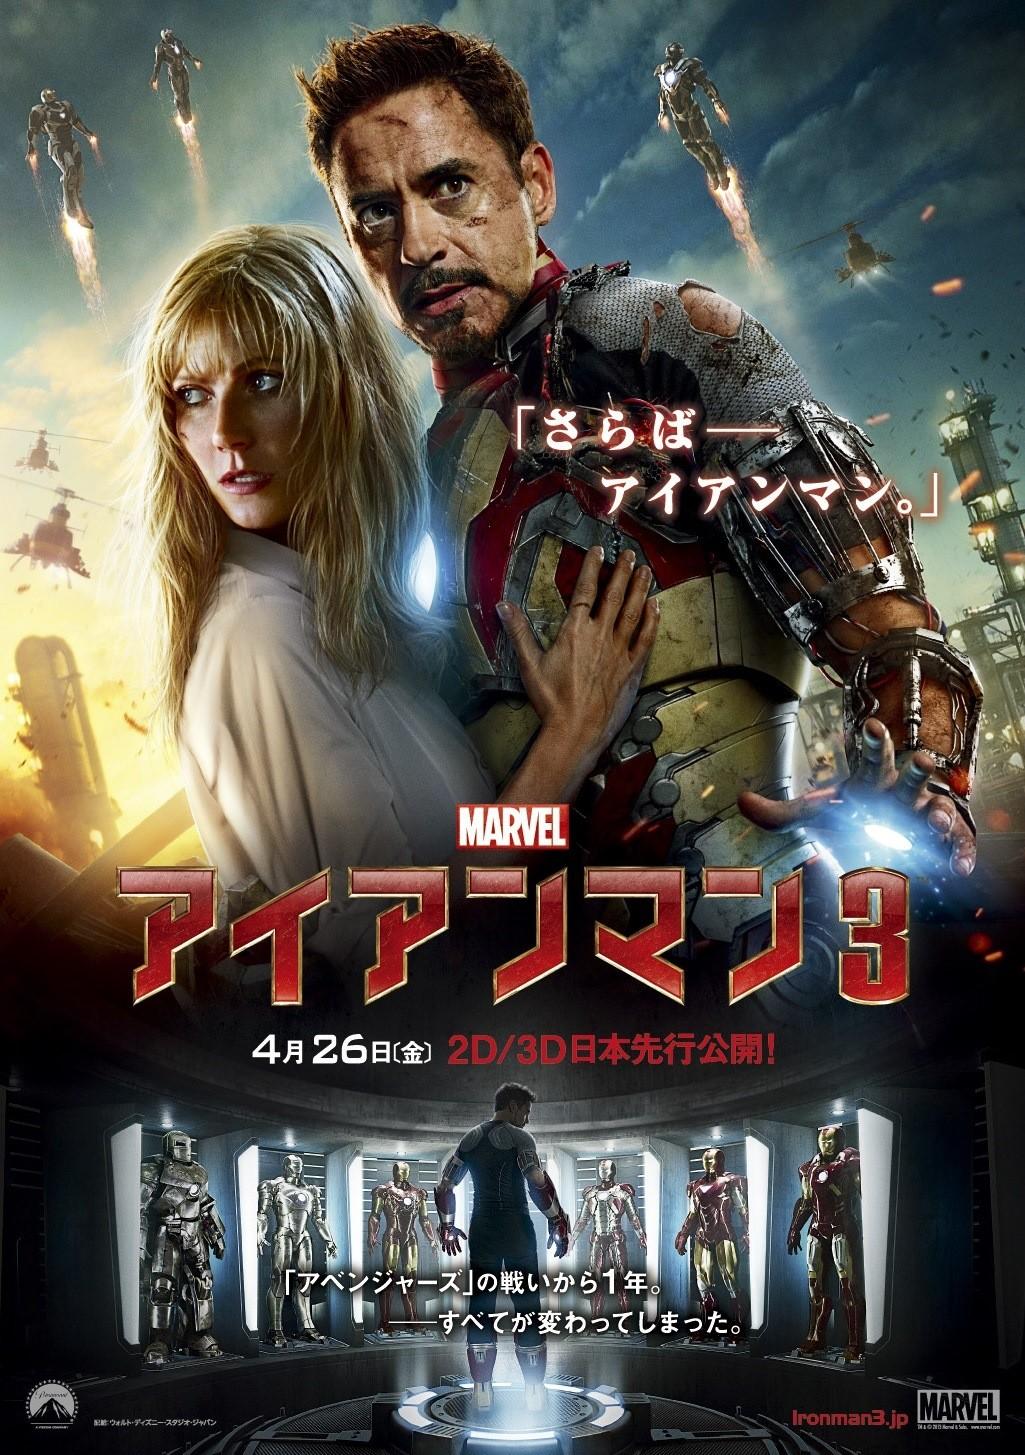 Homem de Ferro 3 Poster japones 6Mar2013